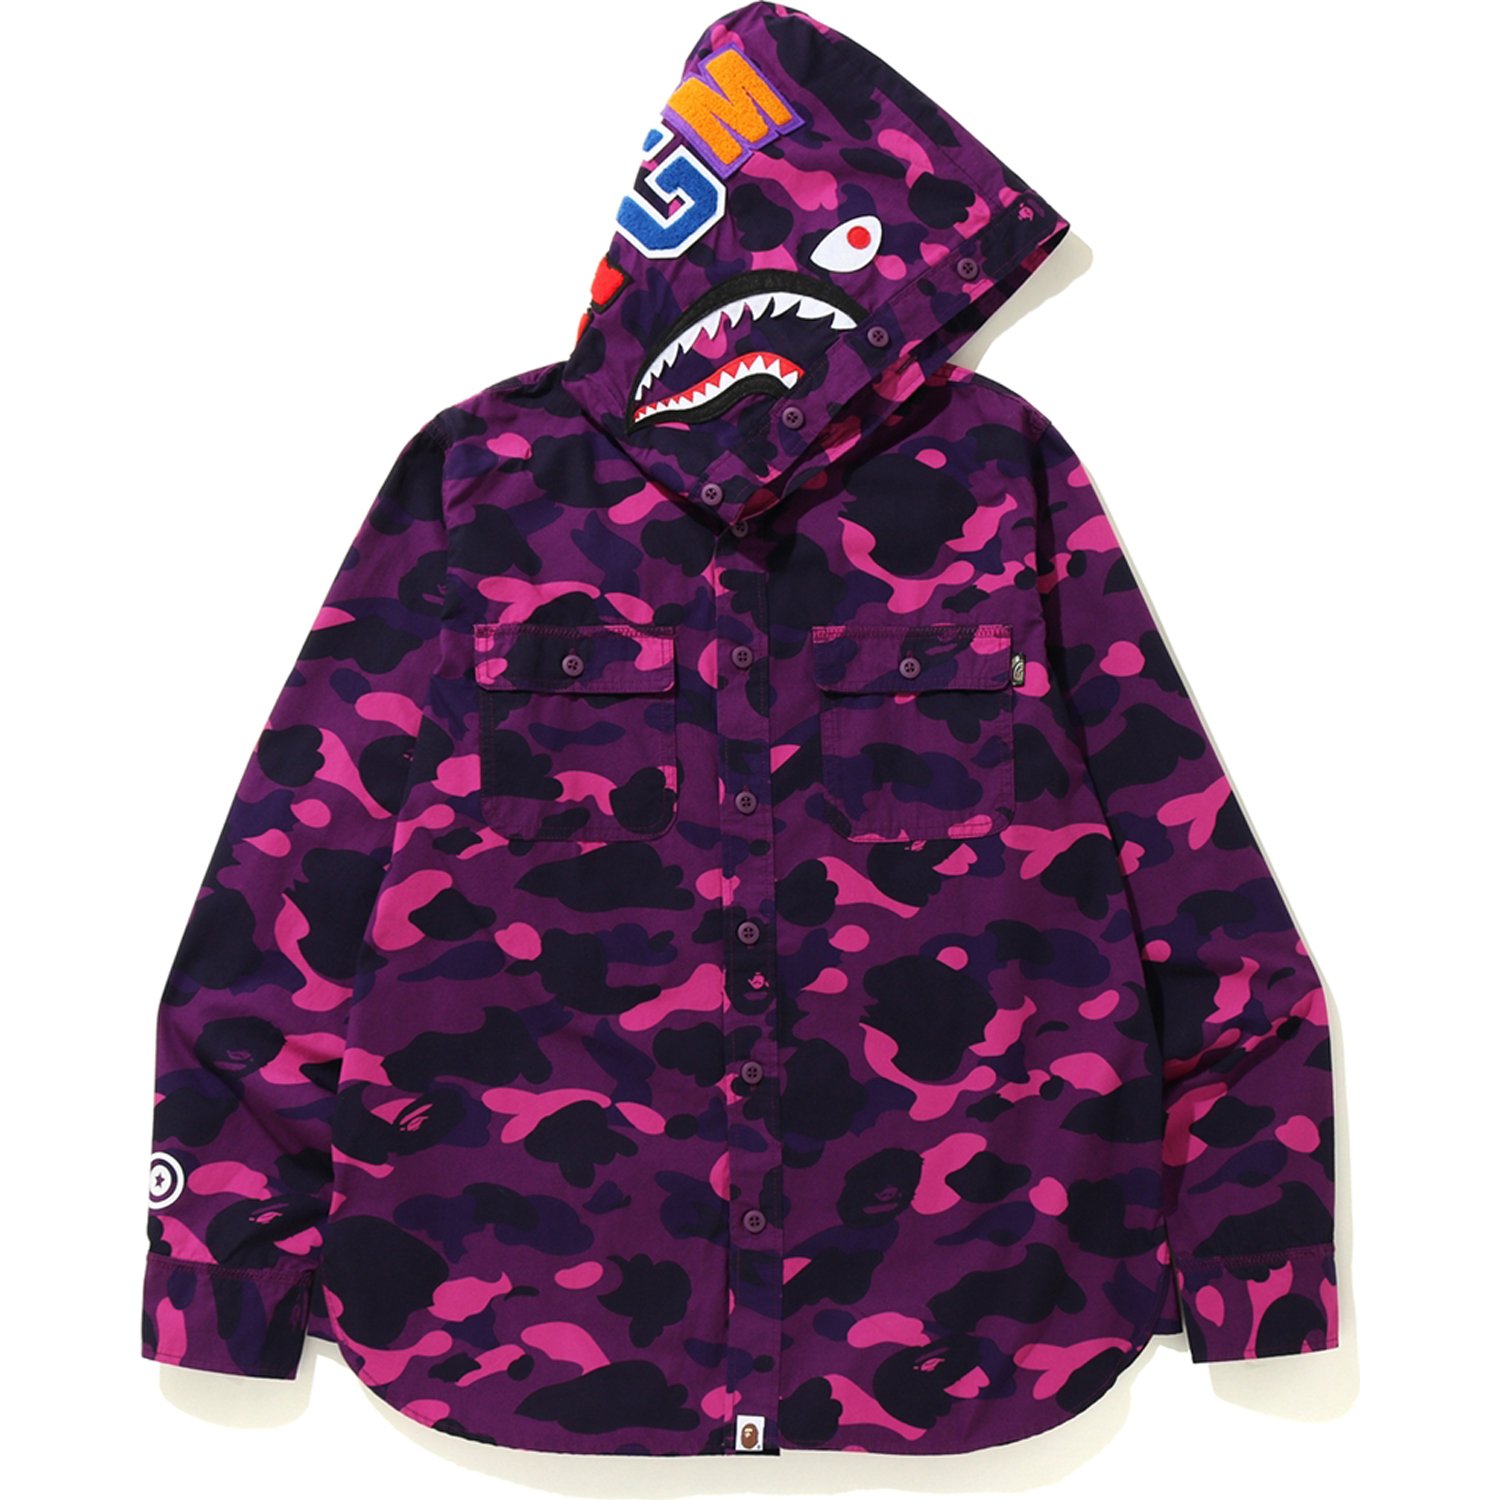 BAPE Purple Shark Sweater